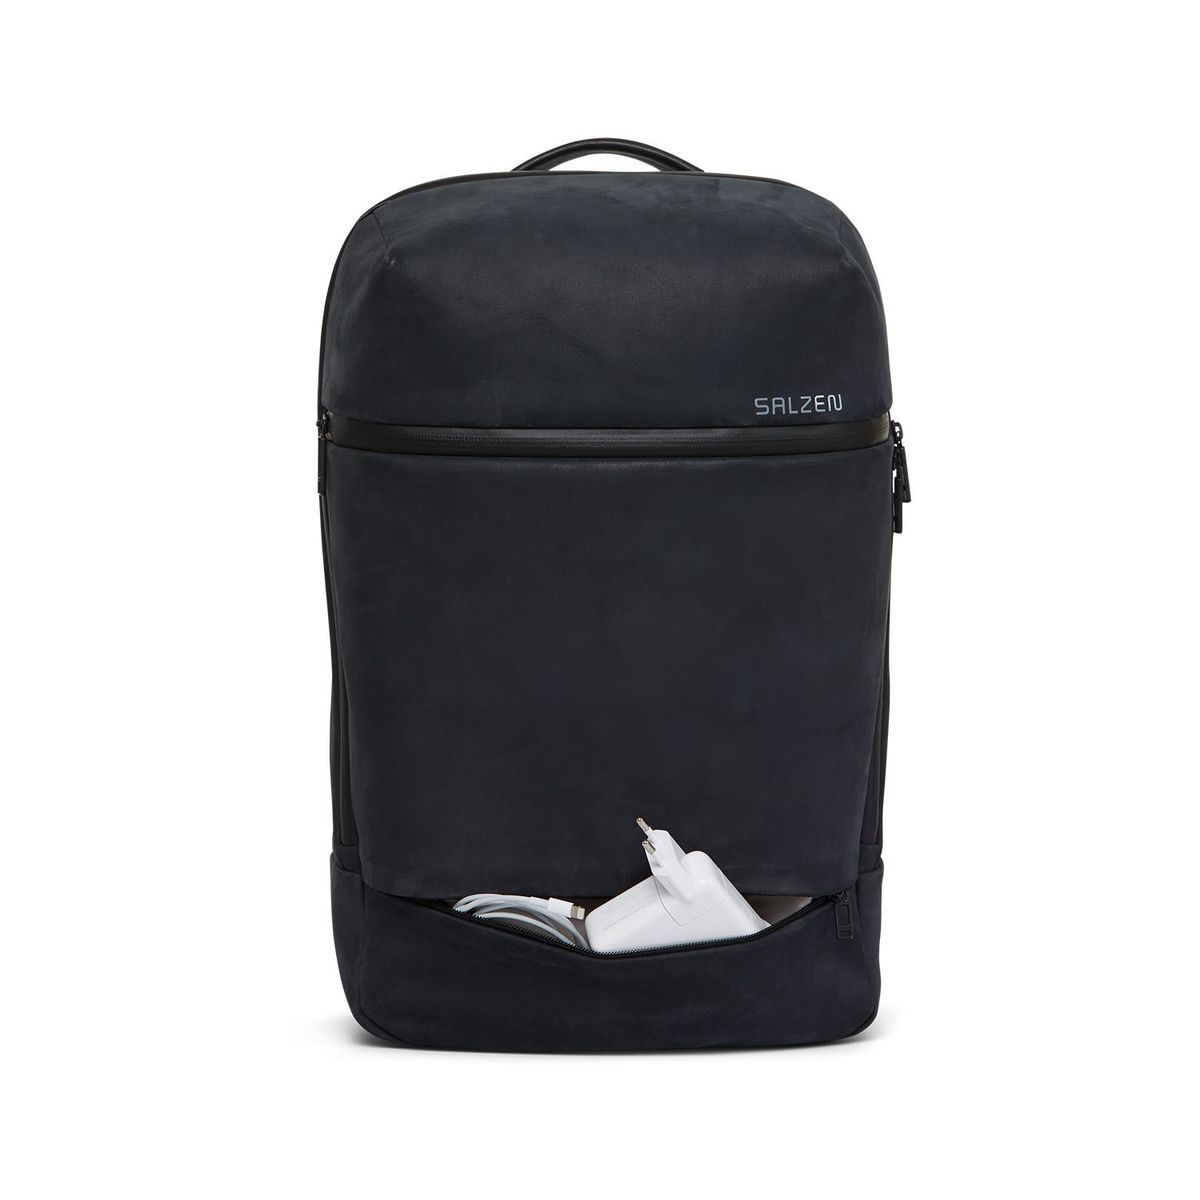 SALZEN Sleek Line Leather Daypack Backpack Charcoal Black